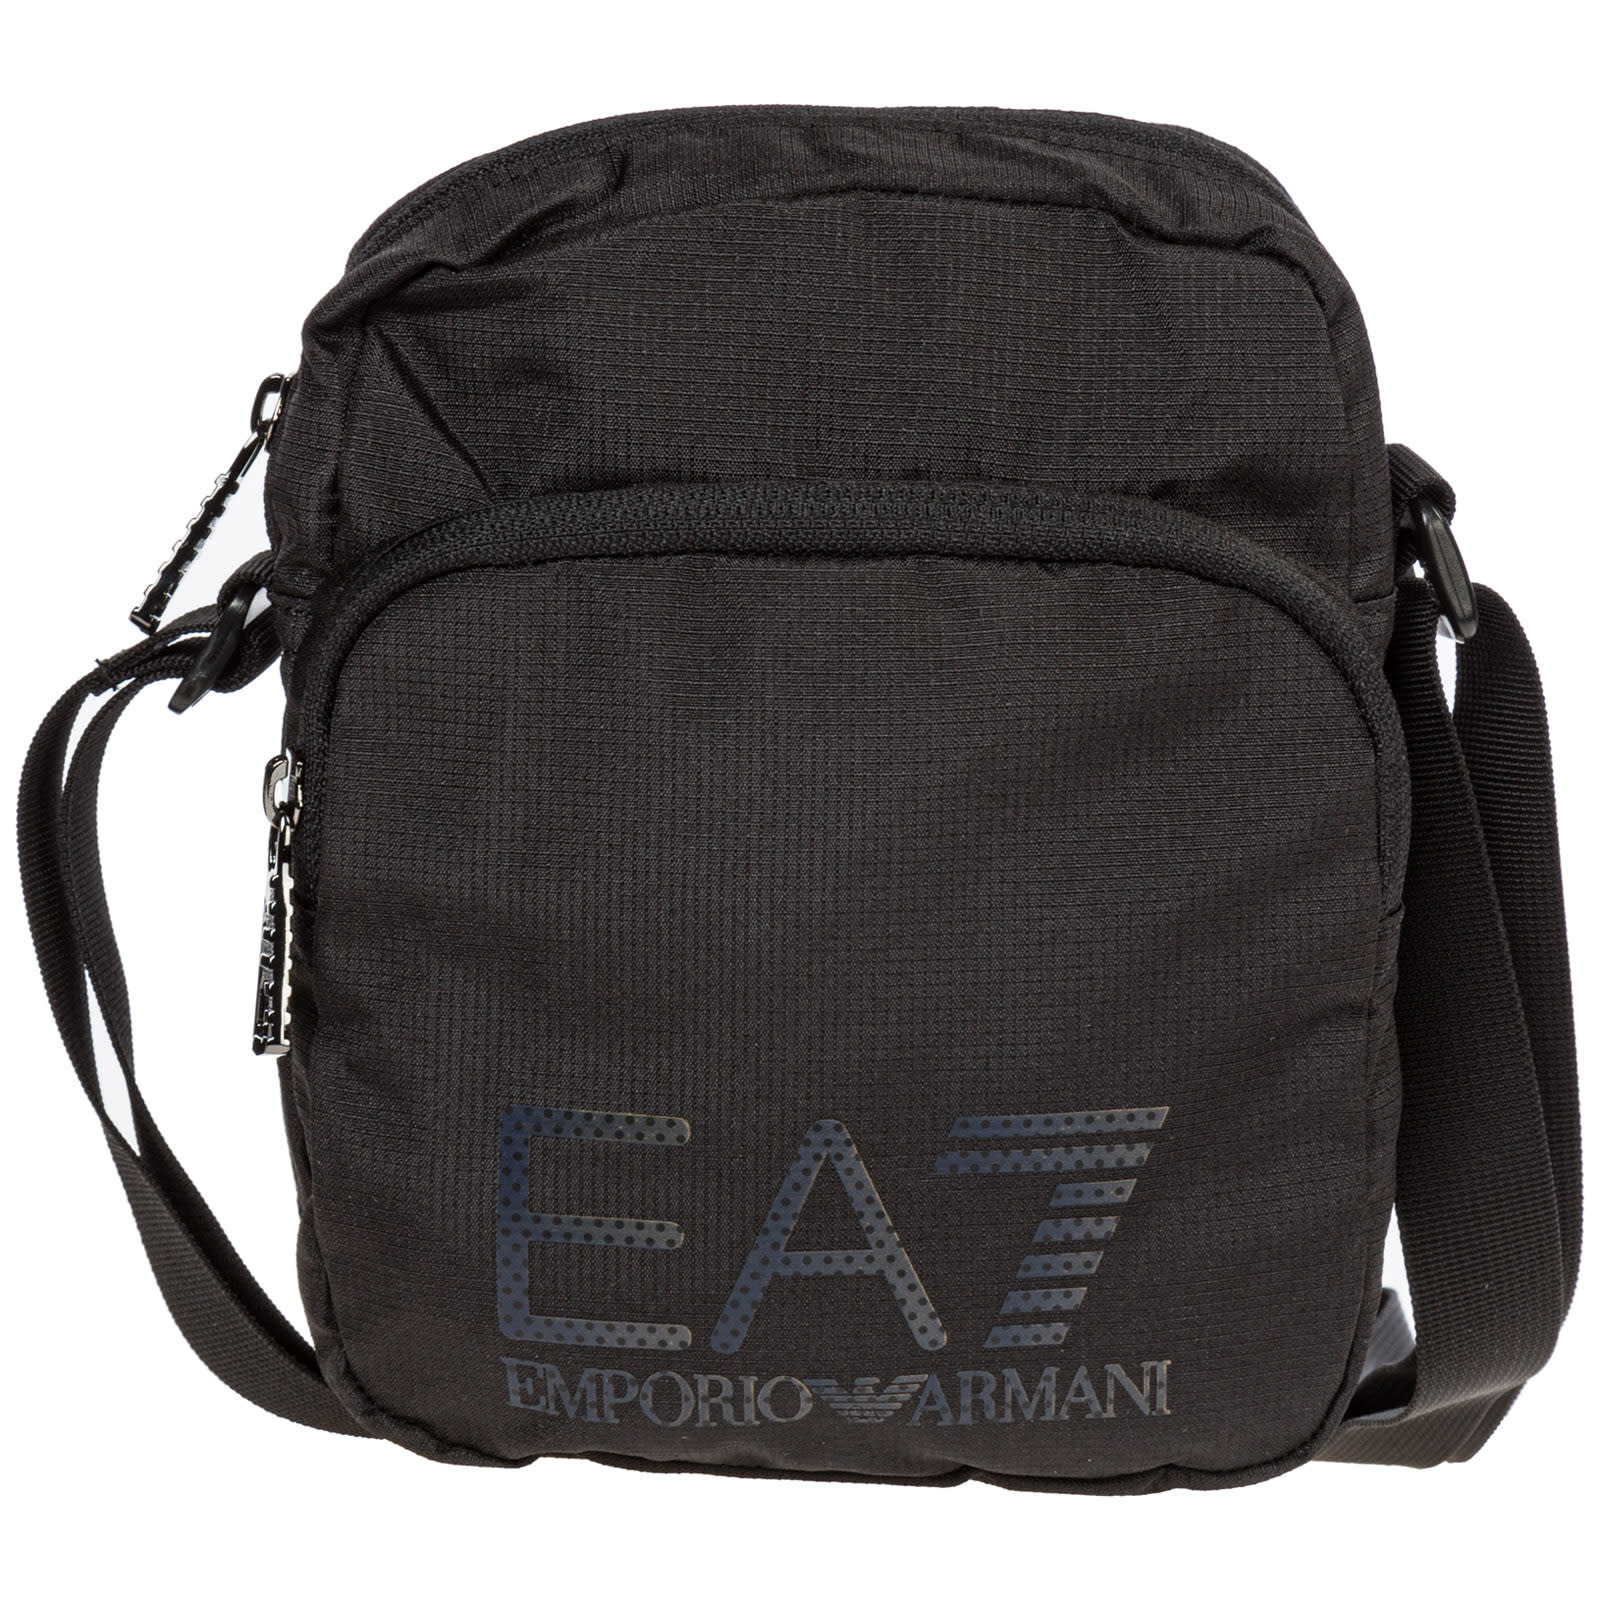 ea7 crossbody bag